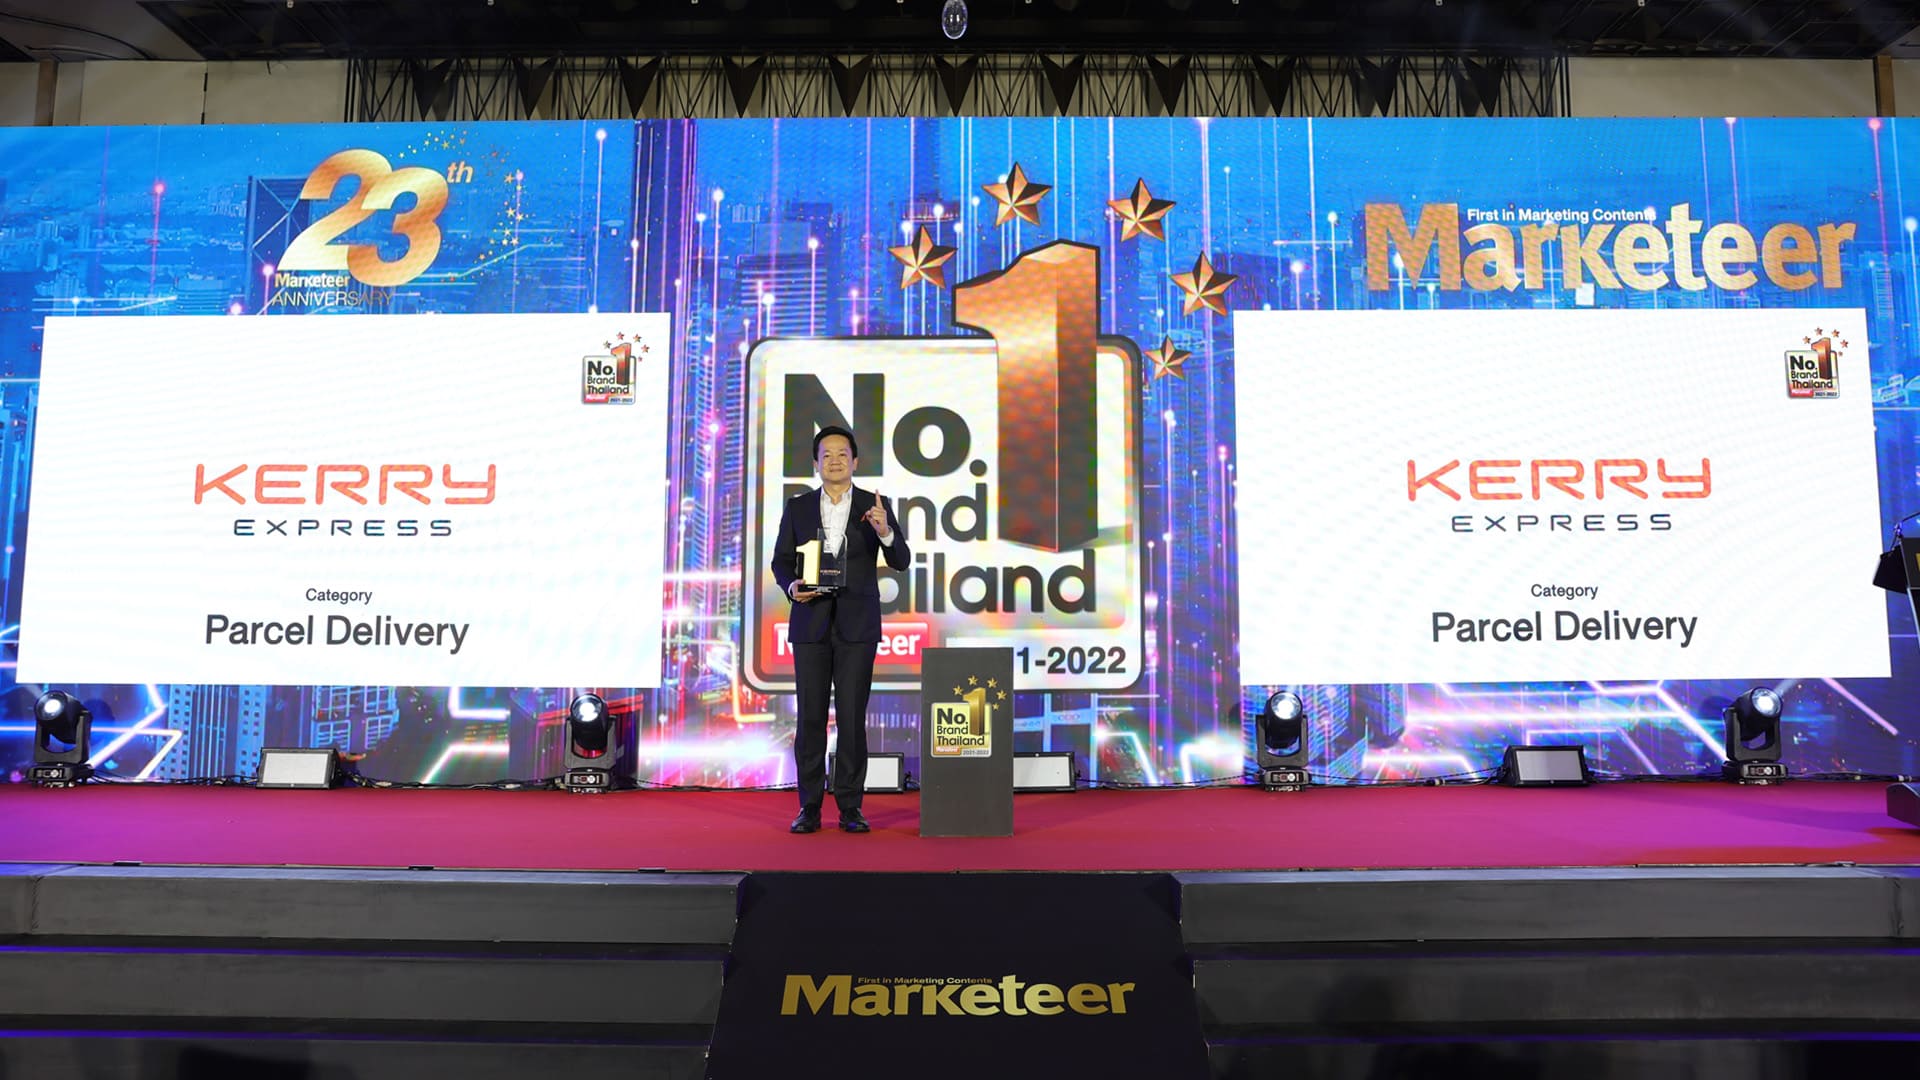 Kerry Express ตอกย้ำแบรนด์ยอดนิยมสูงสุดอันดับ 1 การันตีด้วยรางวัล “No.1 Brand Thailand” 5 ปีซ้อน เร็ว-คุณภาพดี-ราคาสุดคุ้ม ครองใจผู้บริโภคทั่วประเทศ 